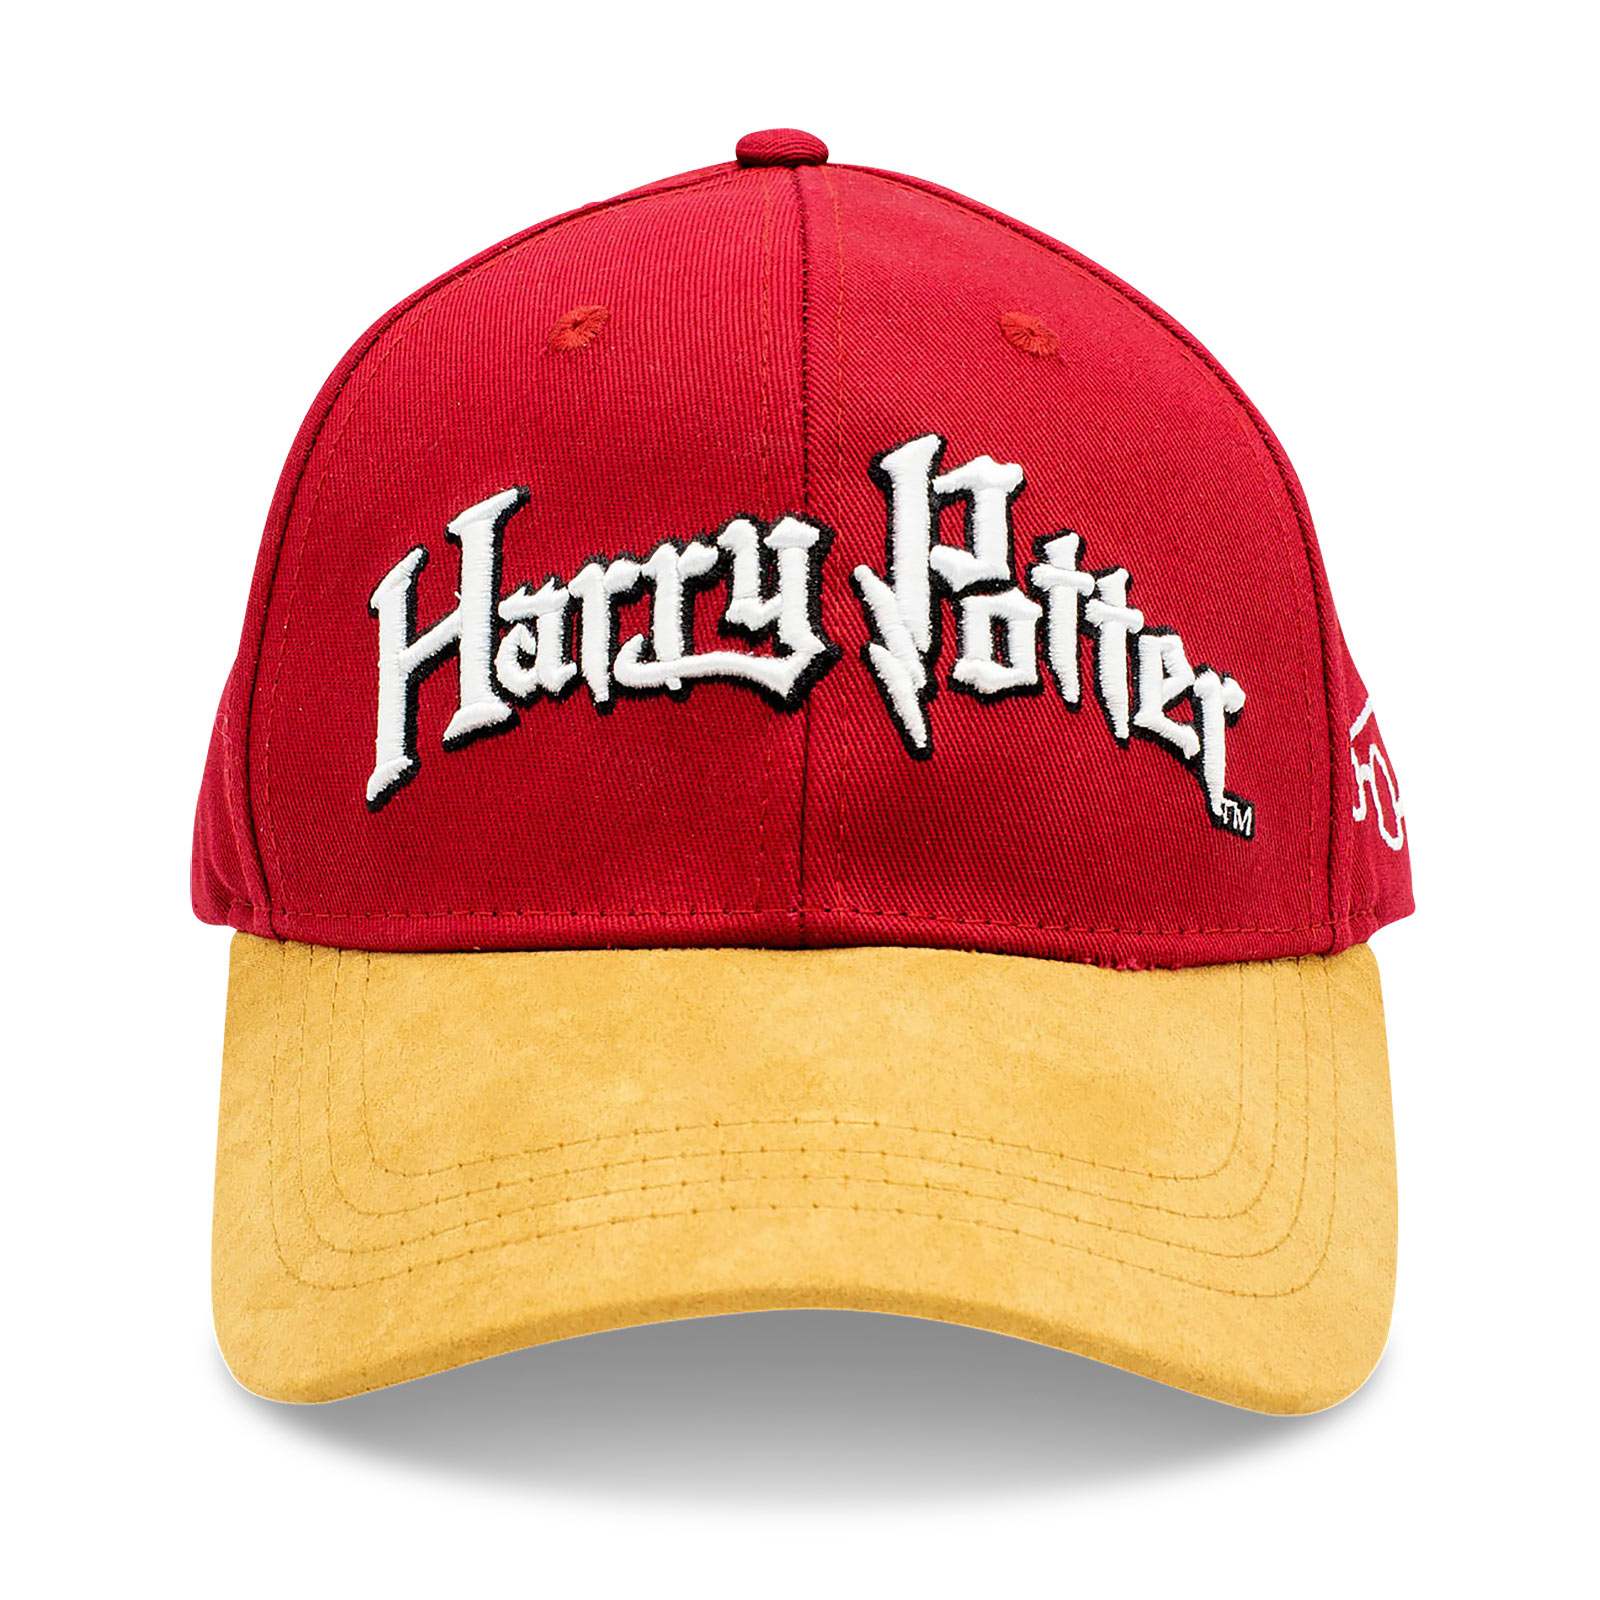 Harry Potter - Logo Basecap rot-braun